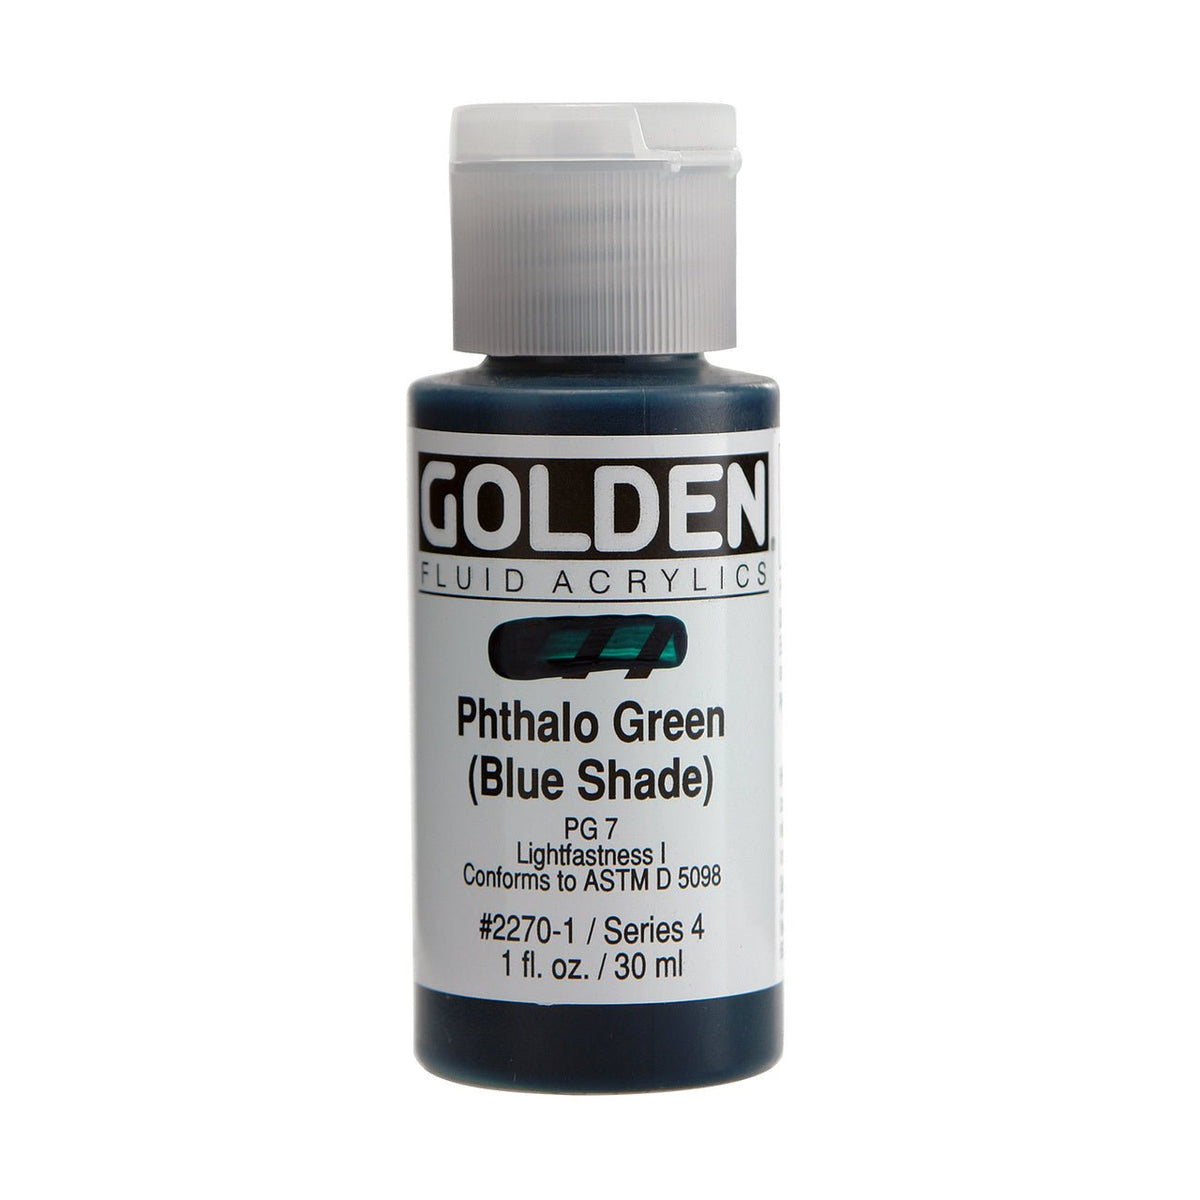 Golden Fluid Acrylic Phthalo Green (blue shade) 1 oz - merriartist.com